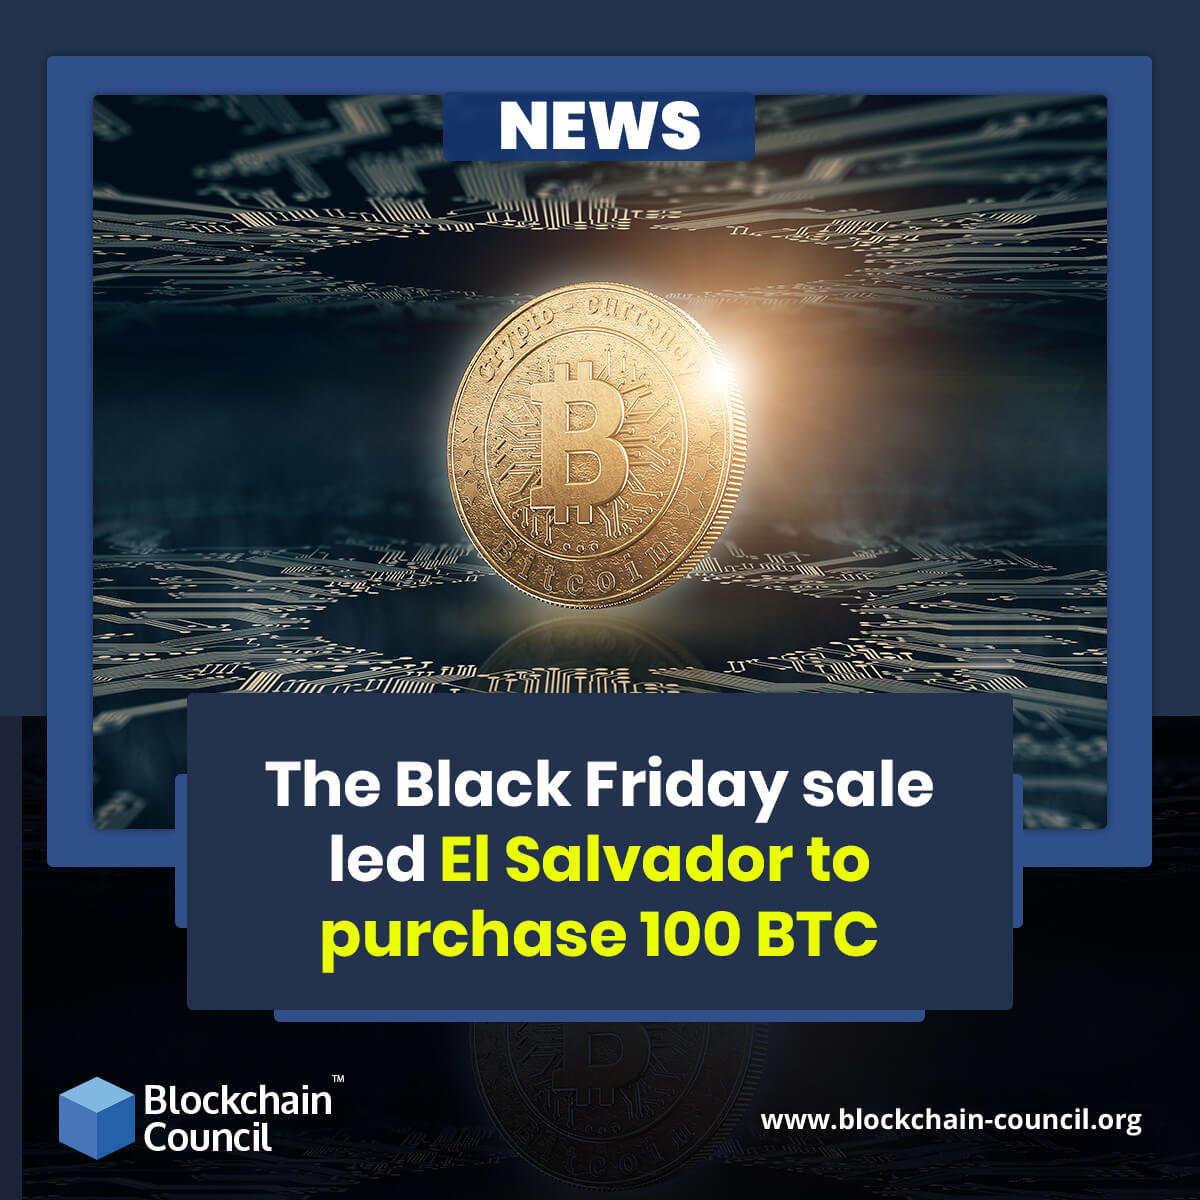 The Black Friday sale led El Salvador purchase 100 BTC